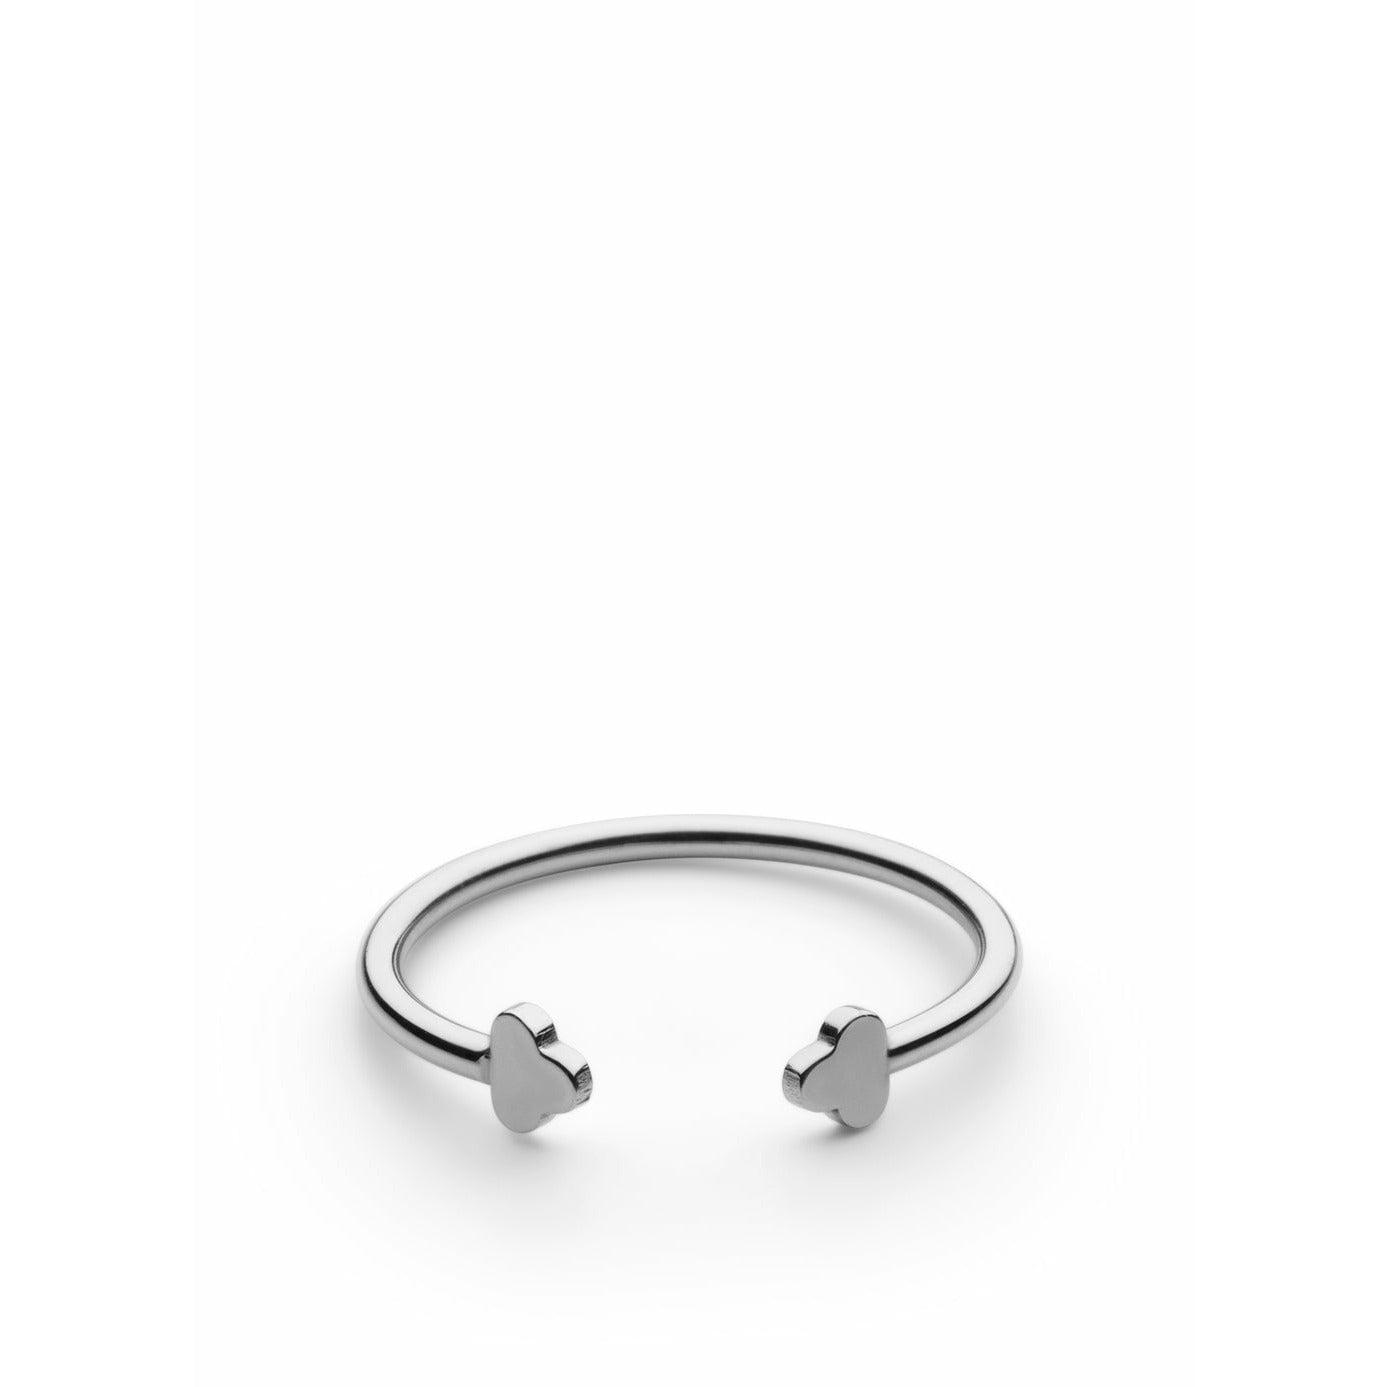 Skultuna Offener Key Ring mittelgroßen Stahl Ø1,73 cm